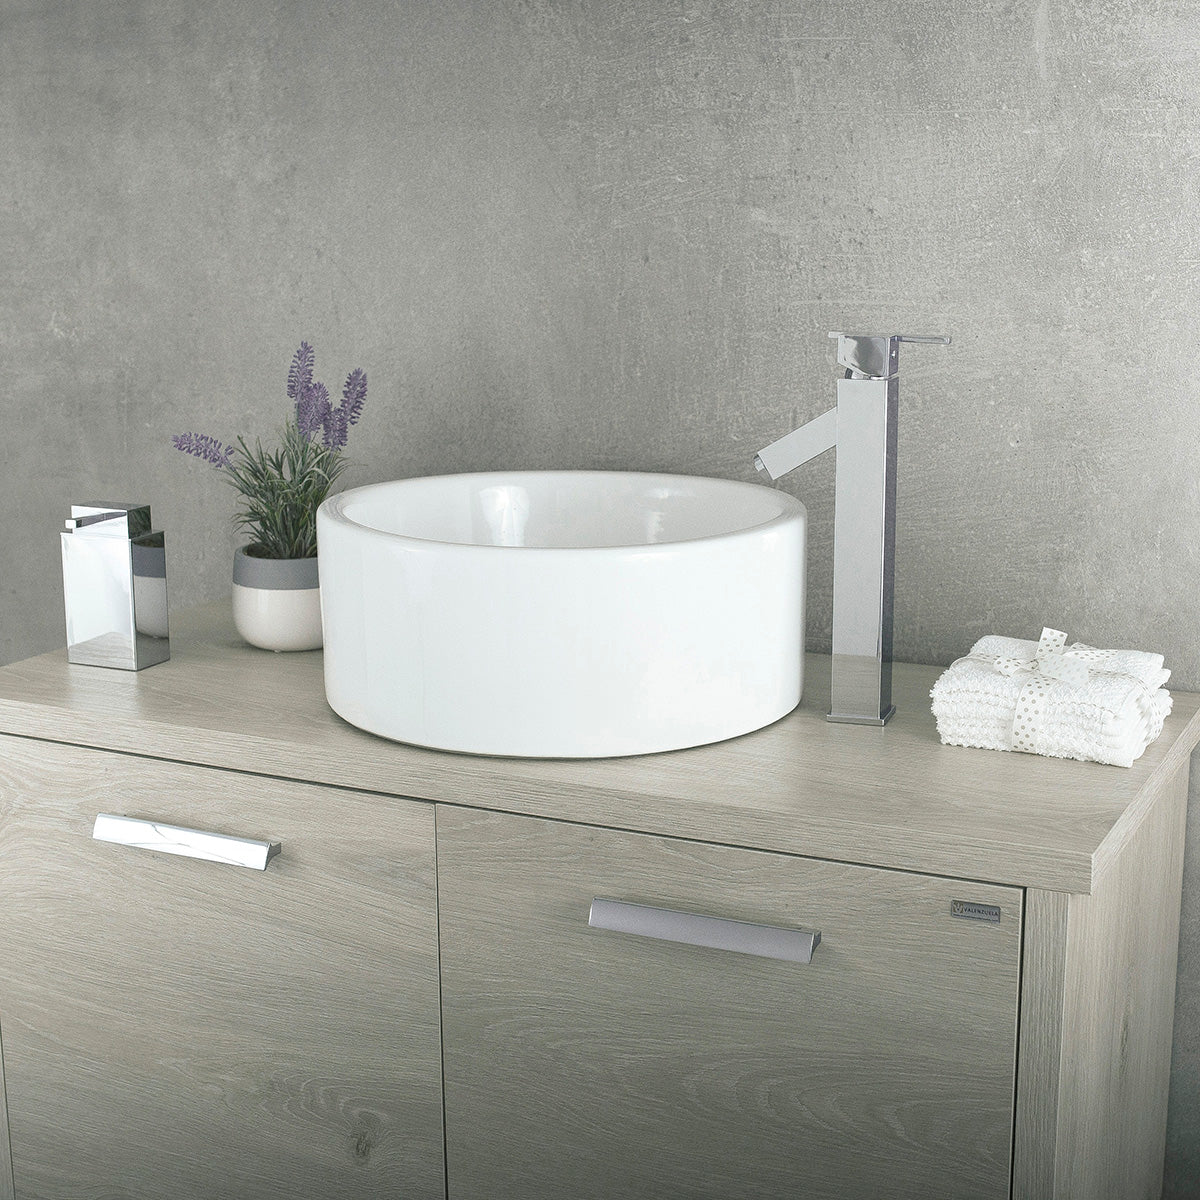 DAX Single Handle Vessel Sink Bathroom Faucet, Brass Body, Chrome Finish, 3-1/8 x 12-9/16 Inches (DAX-1282-CR)